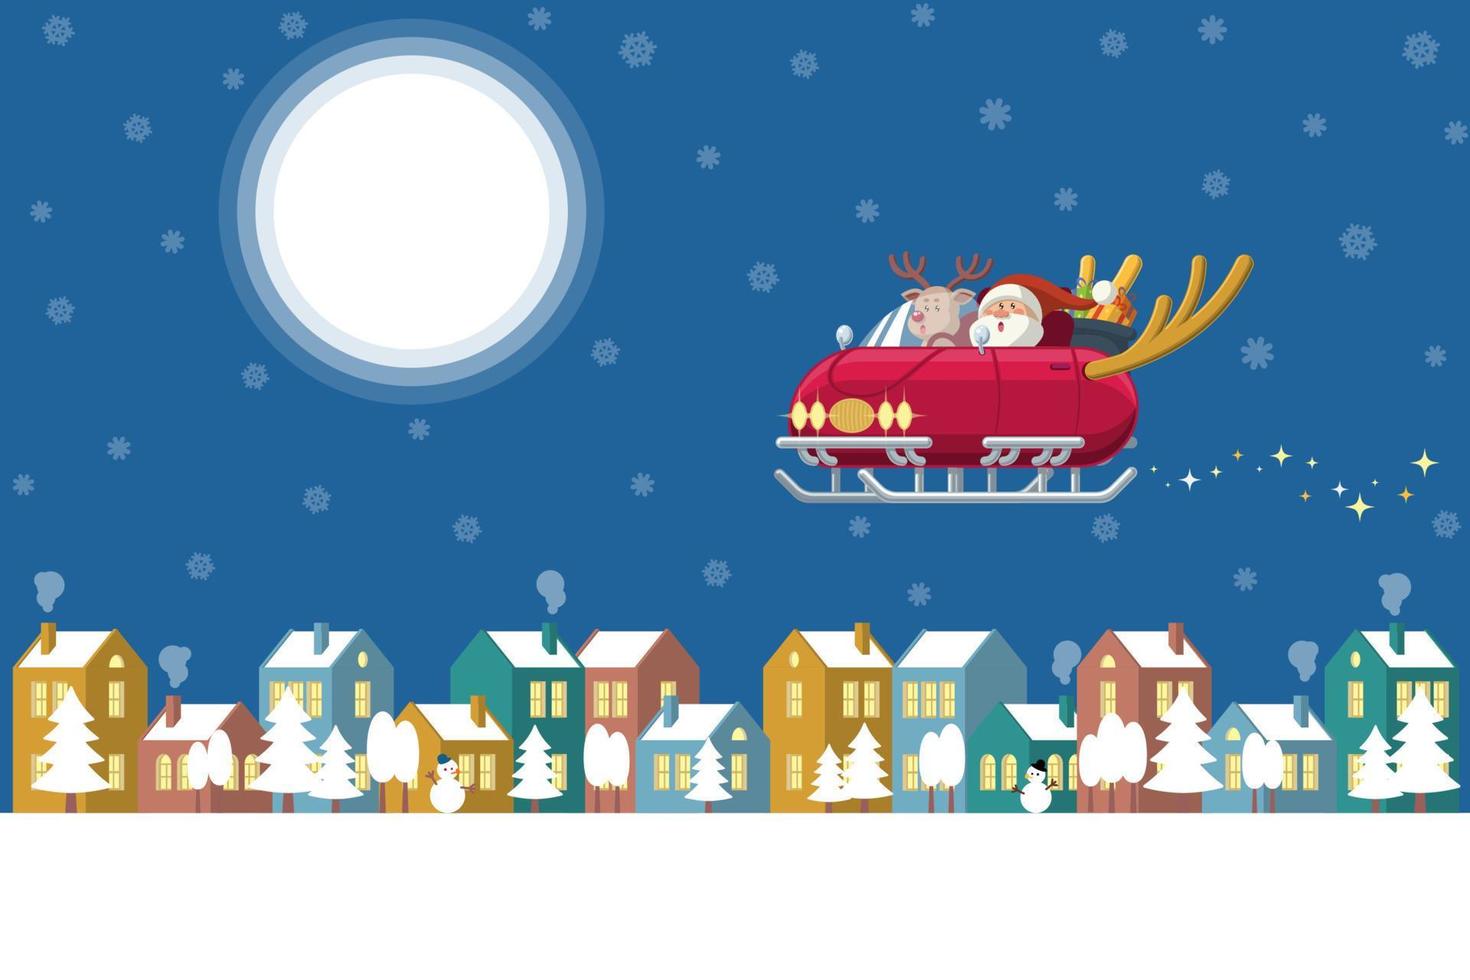 Santa flying sleigh car over winter town at night vector